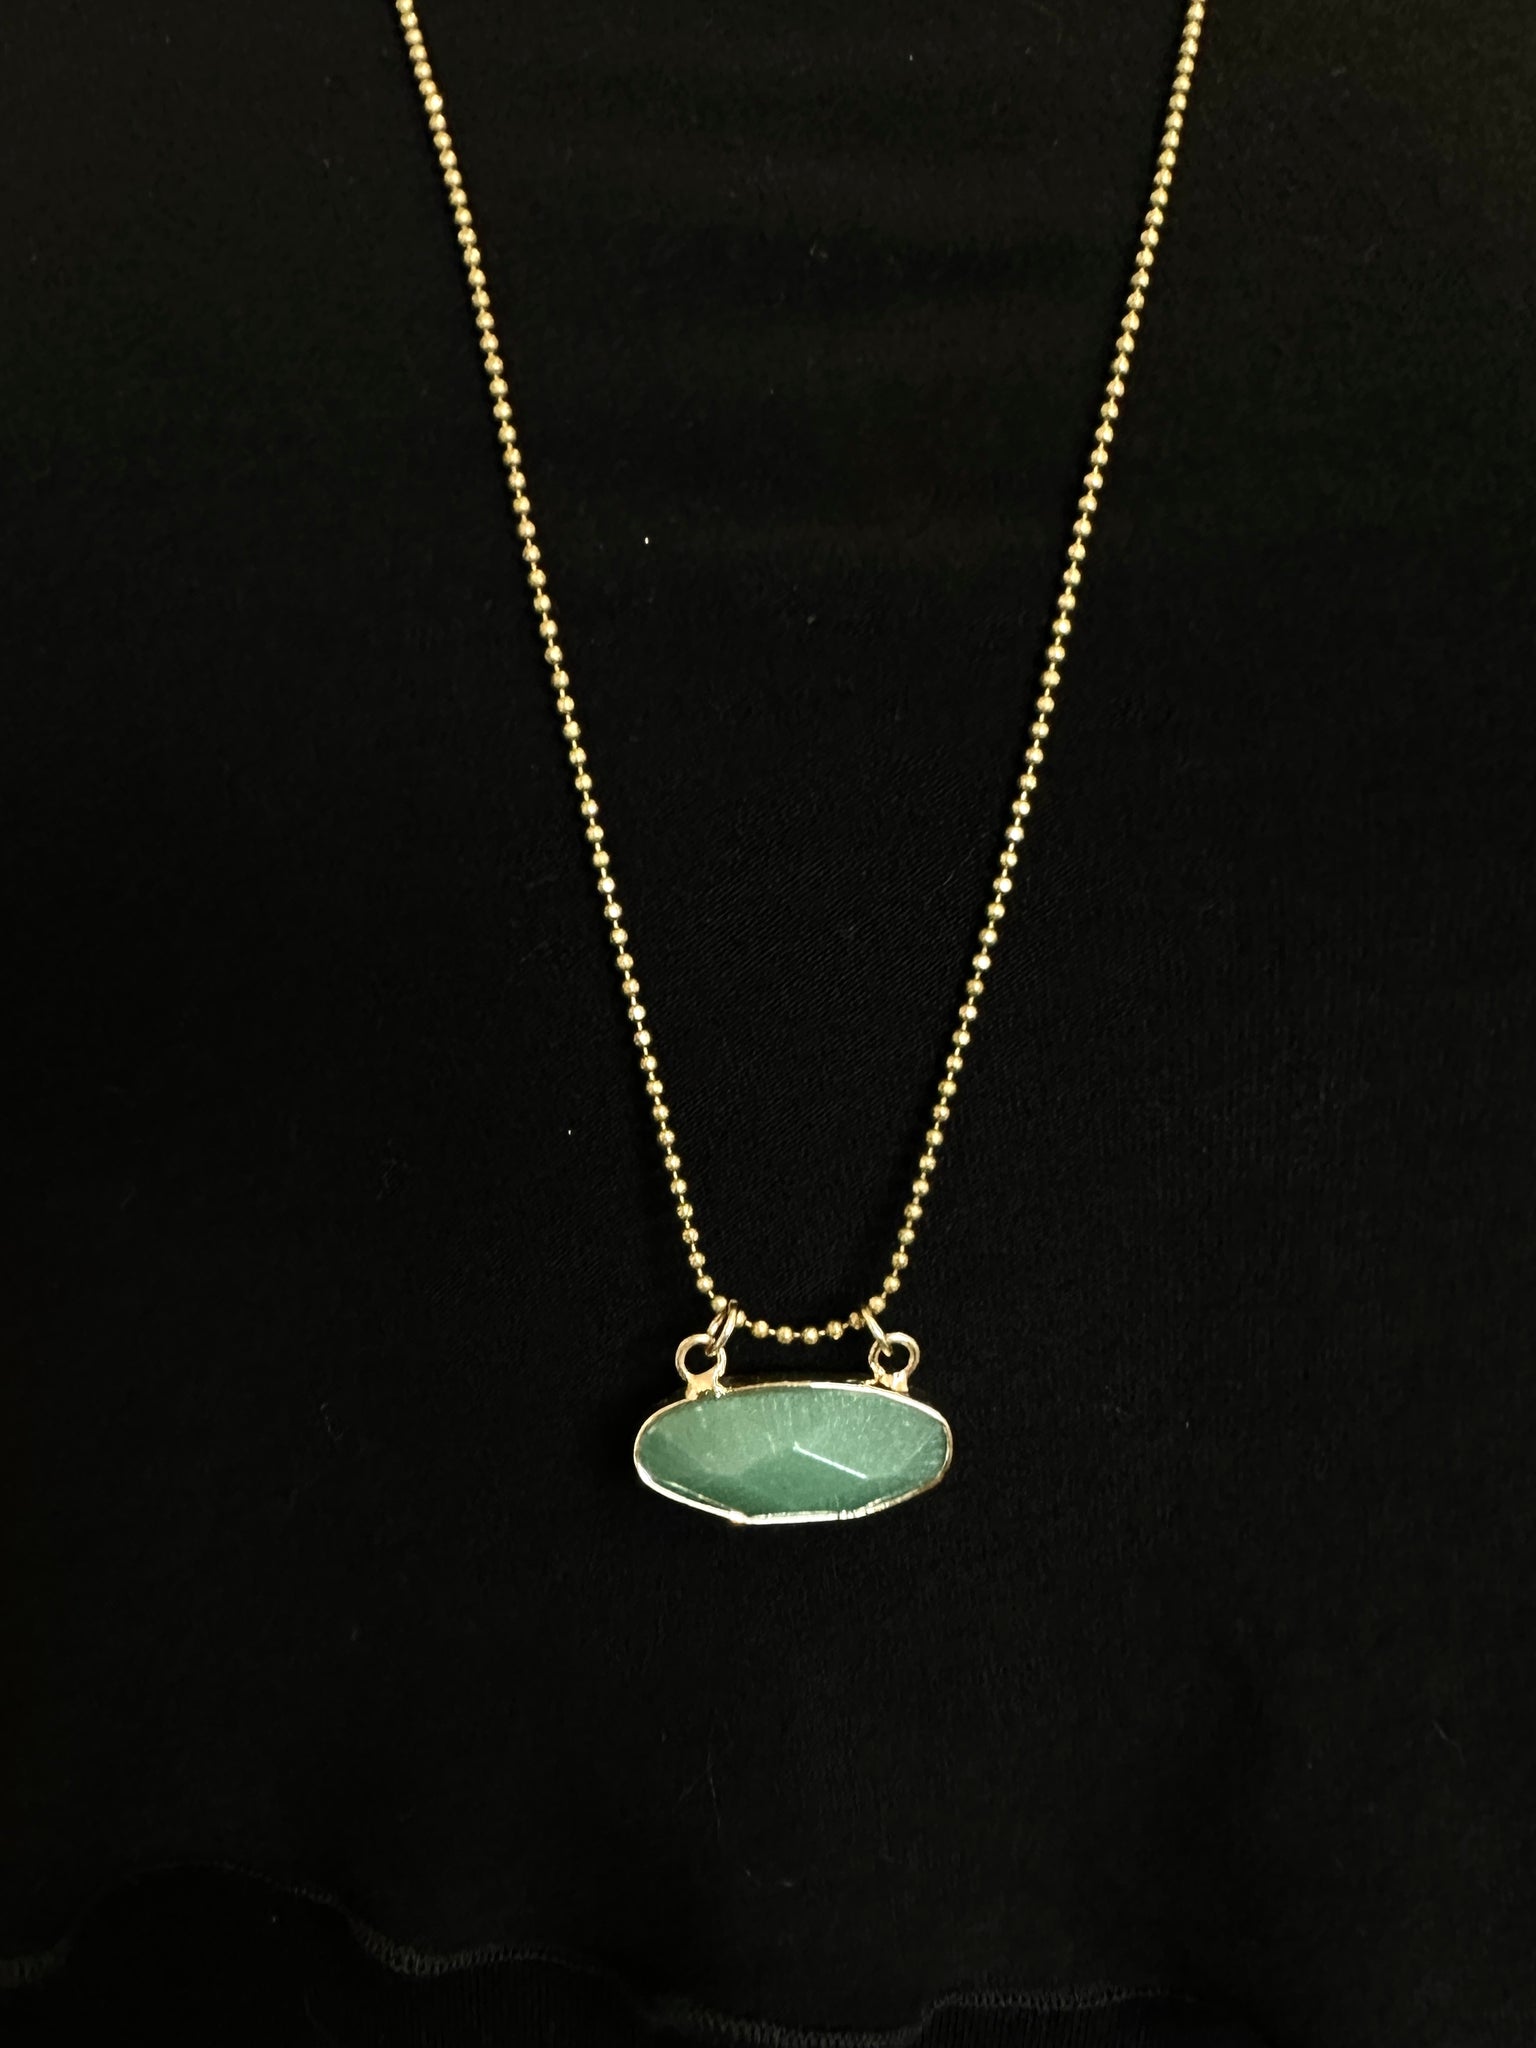 Handmade Ovale Necklace with Semi Precious Stones